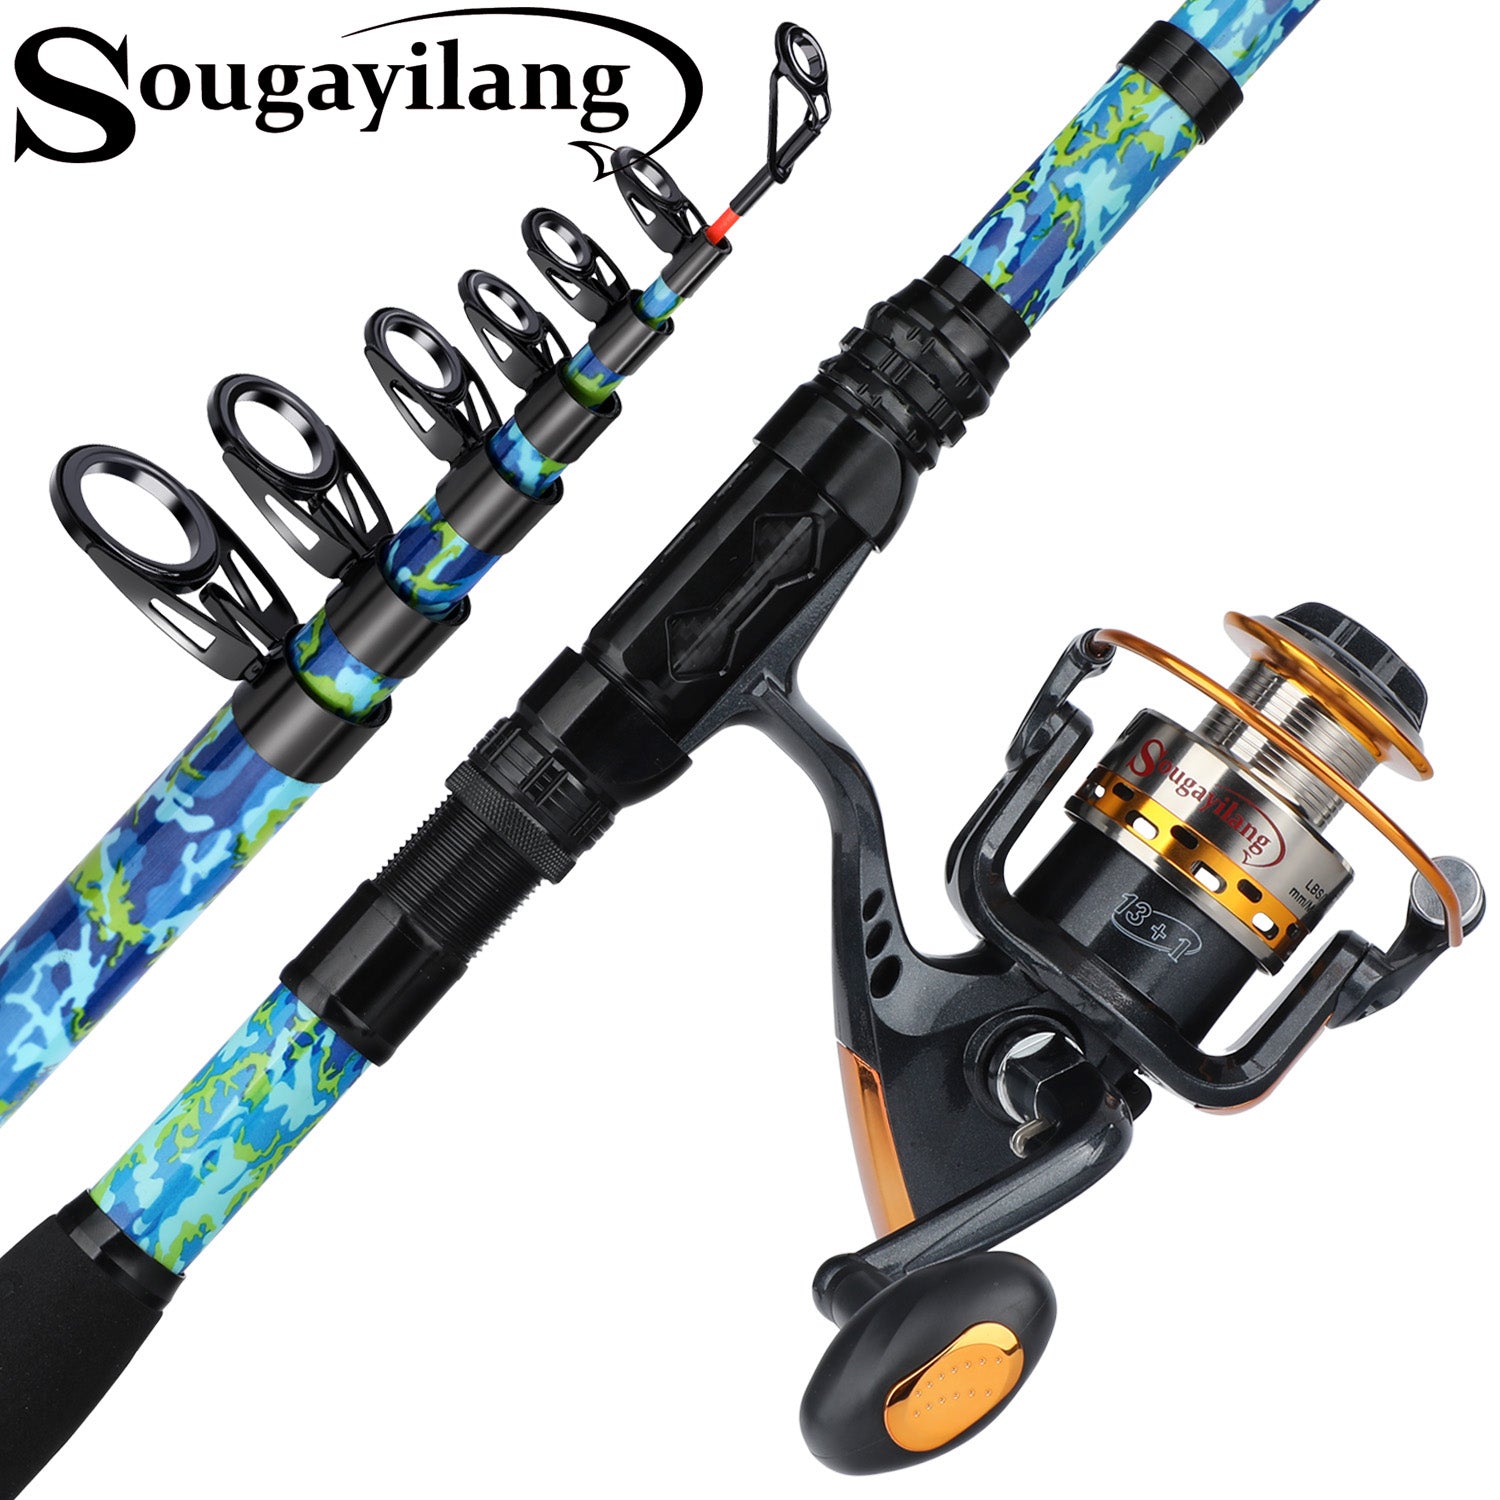 Sougayilang Fishing Rod and Reel Combo Set with Telescopic Fishing